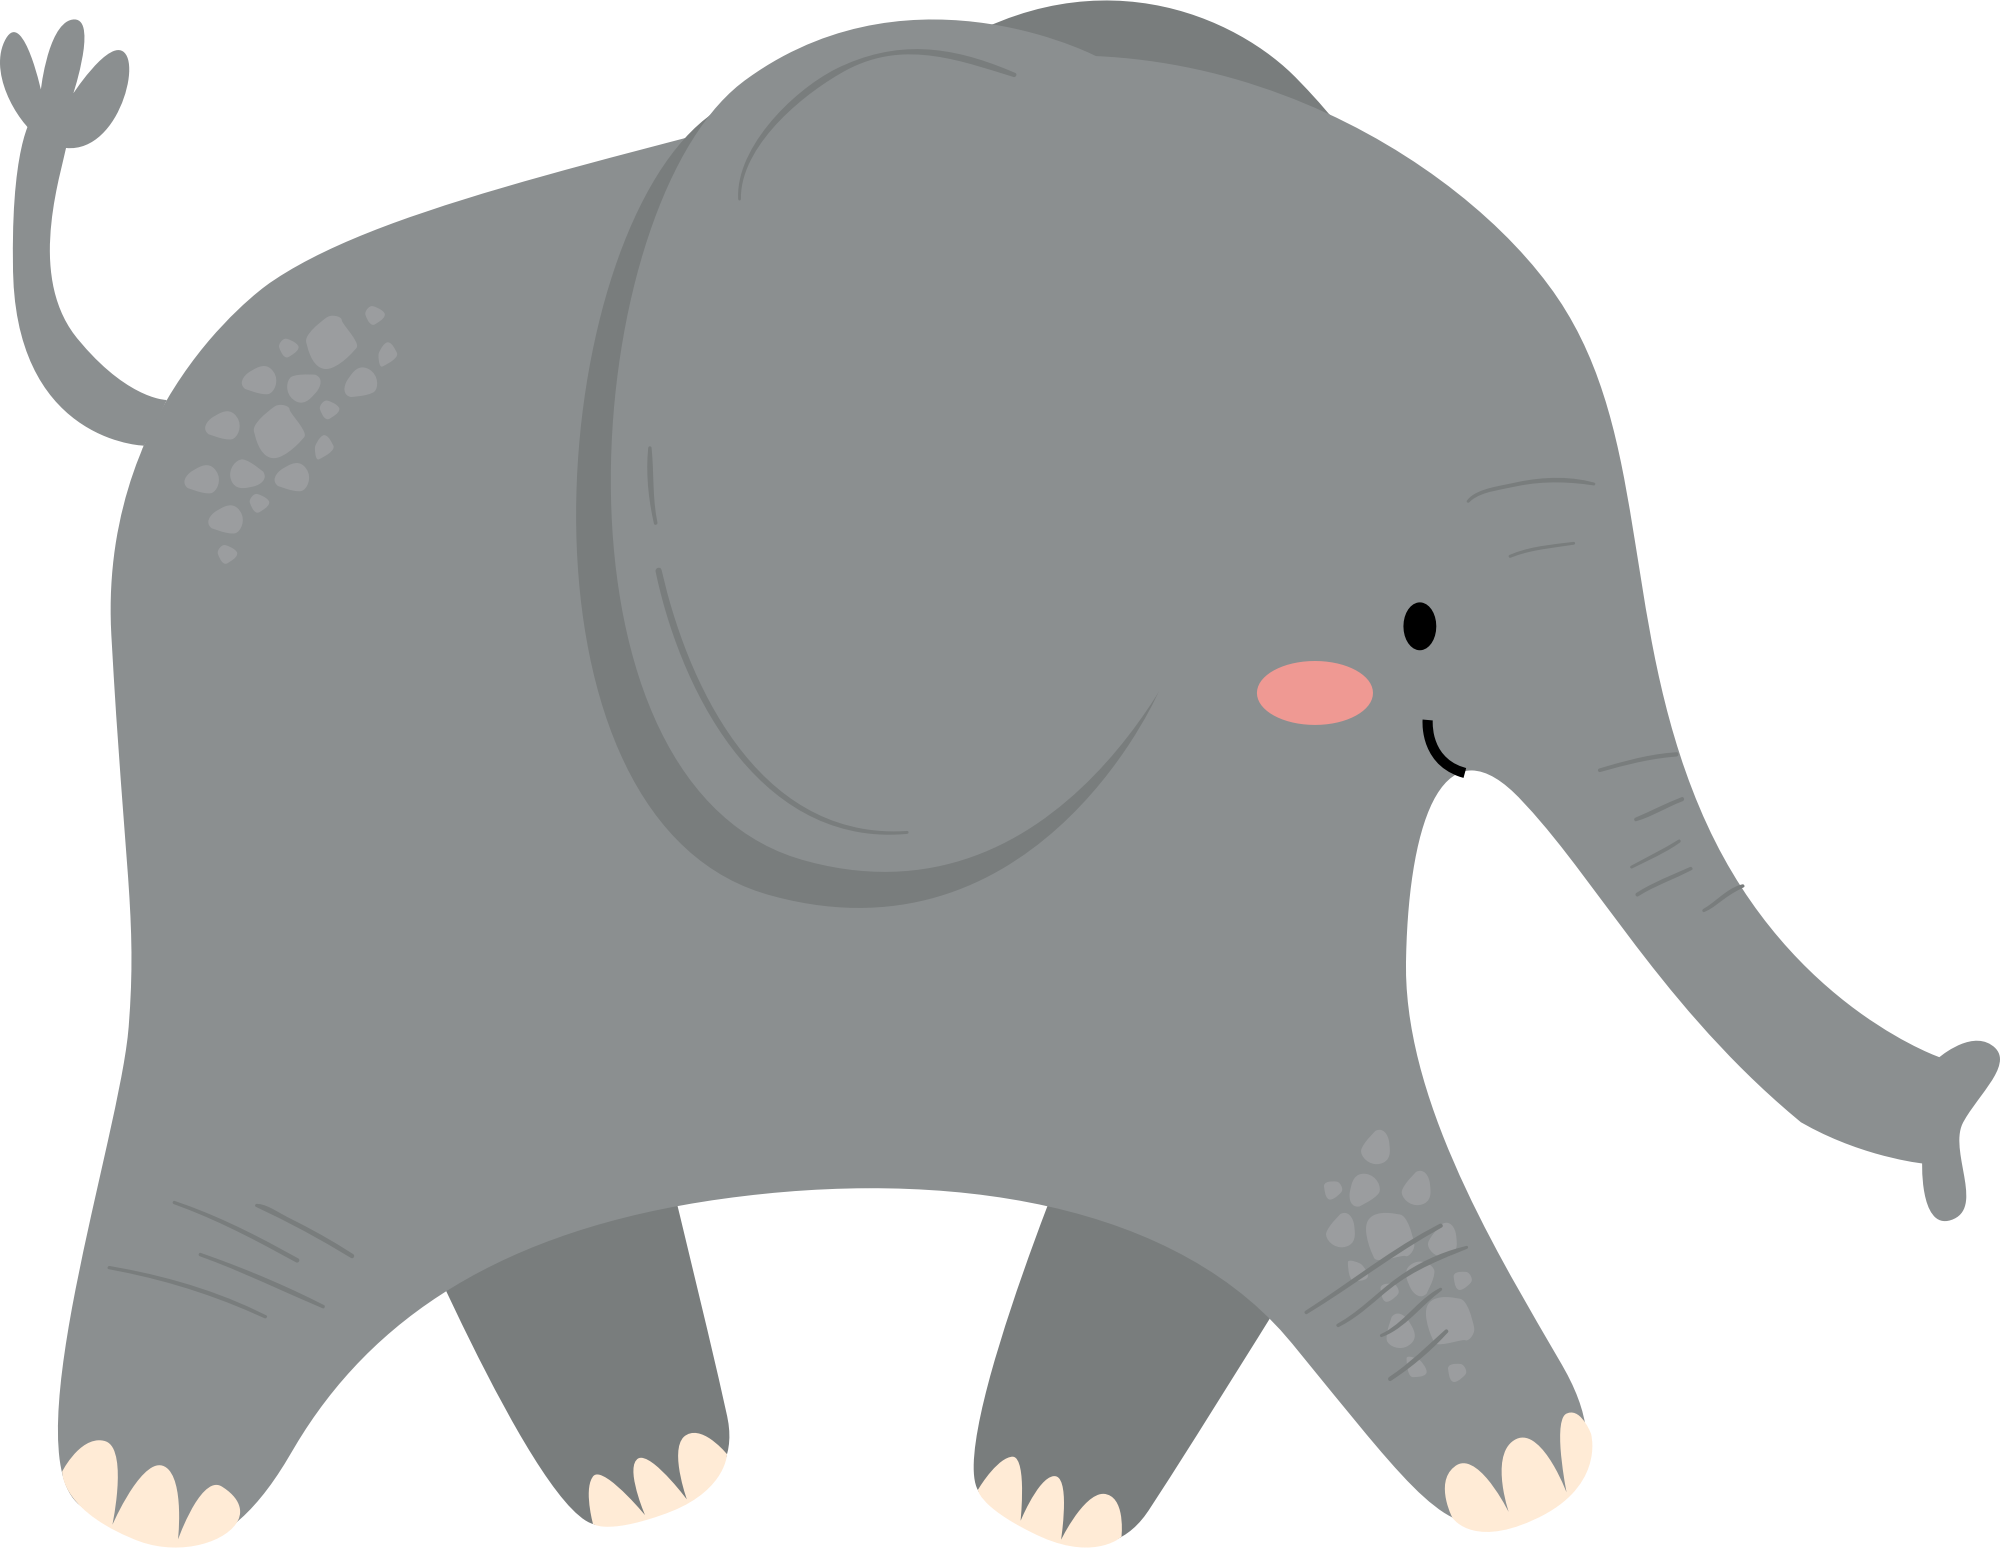 elephants cartoon images